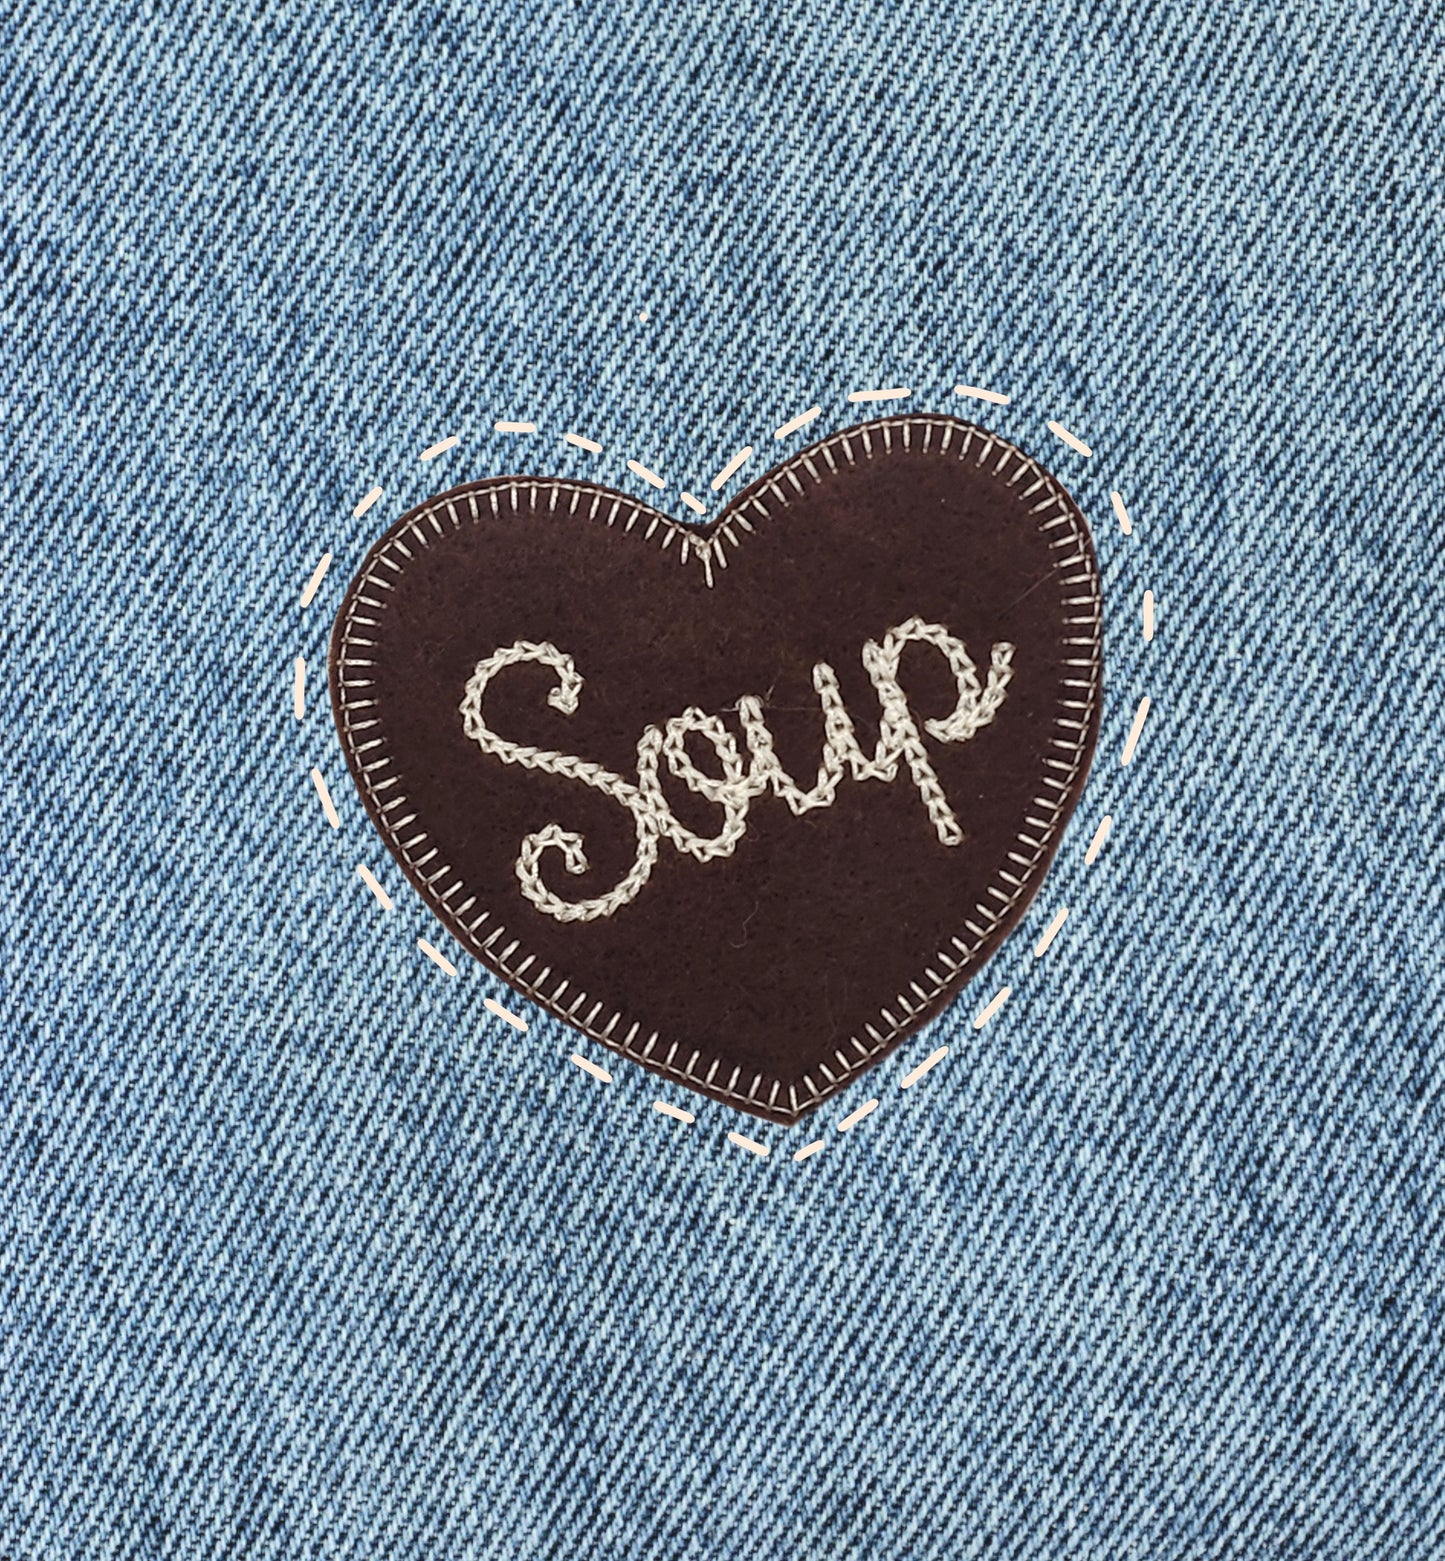 Heart soup patch